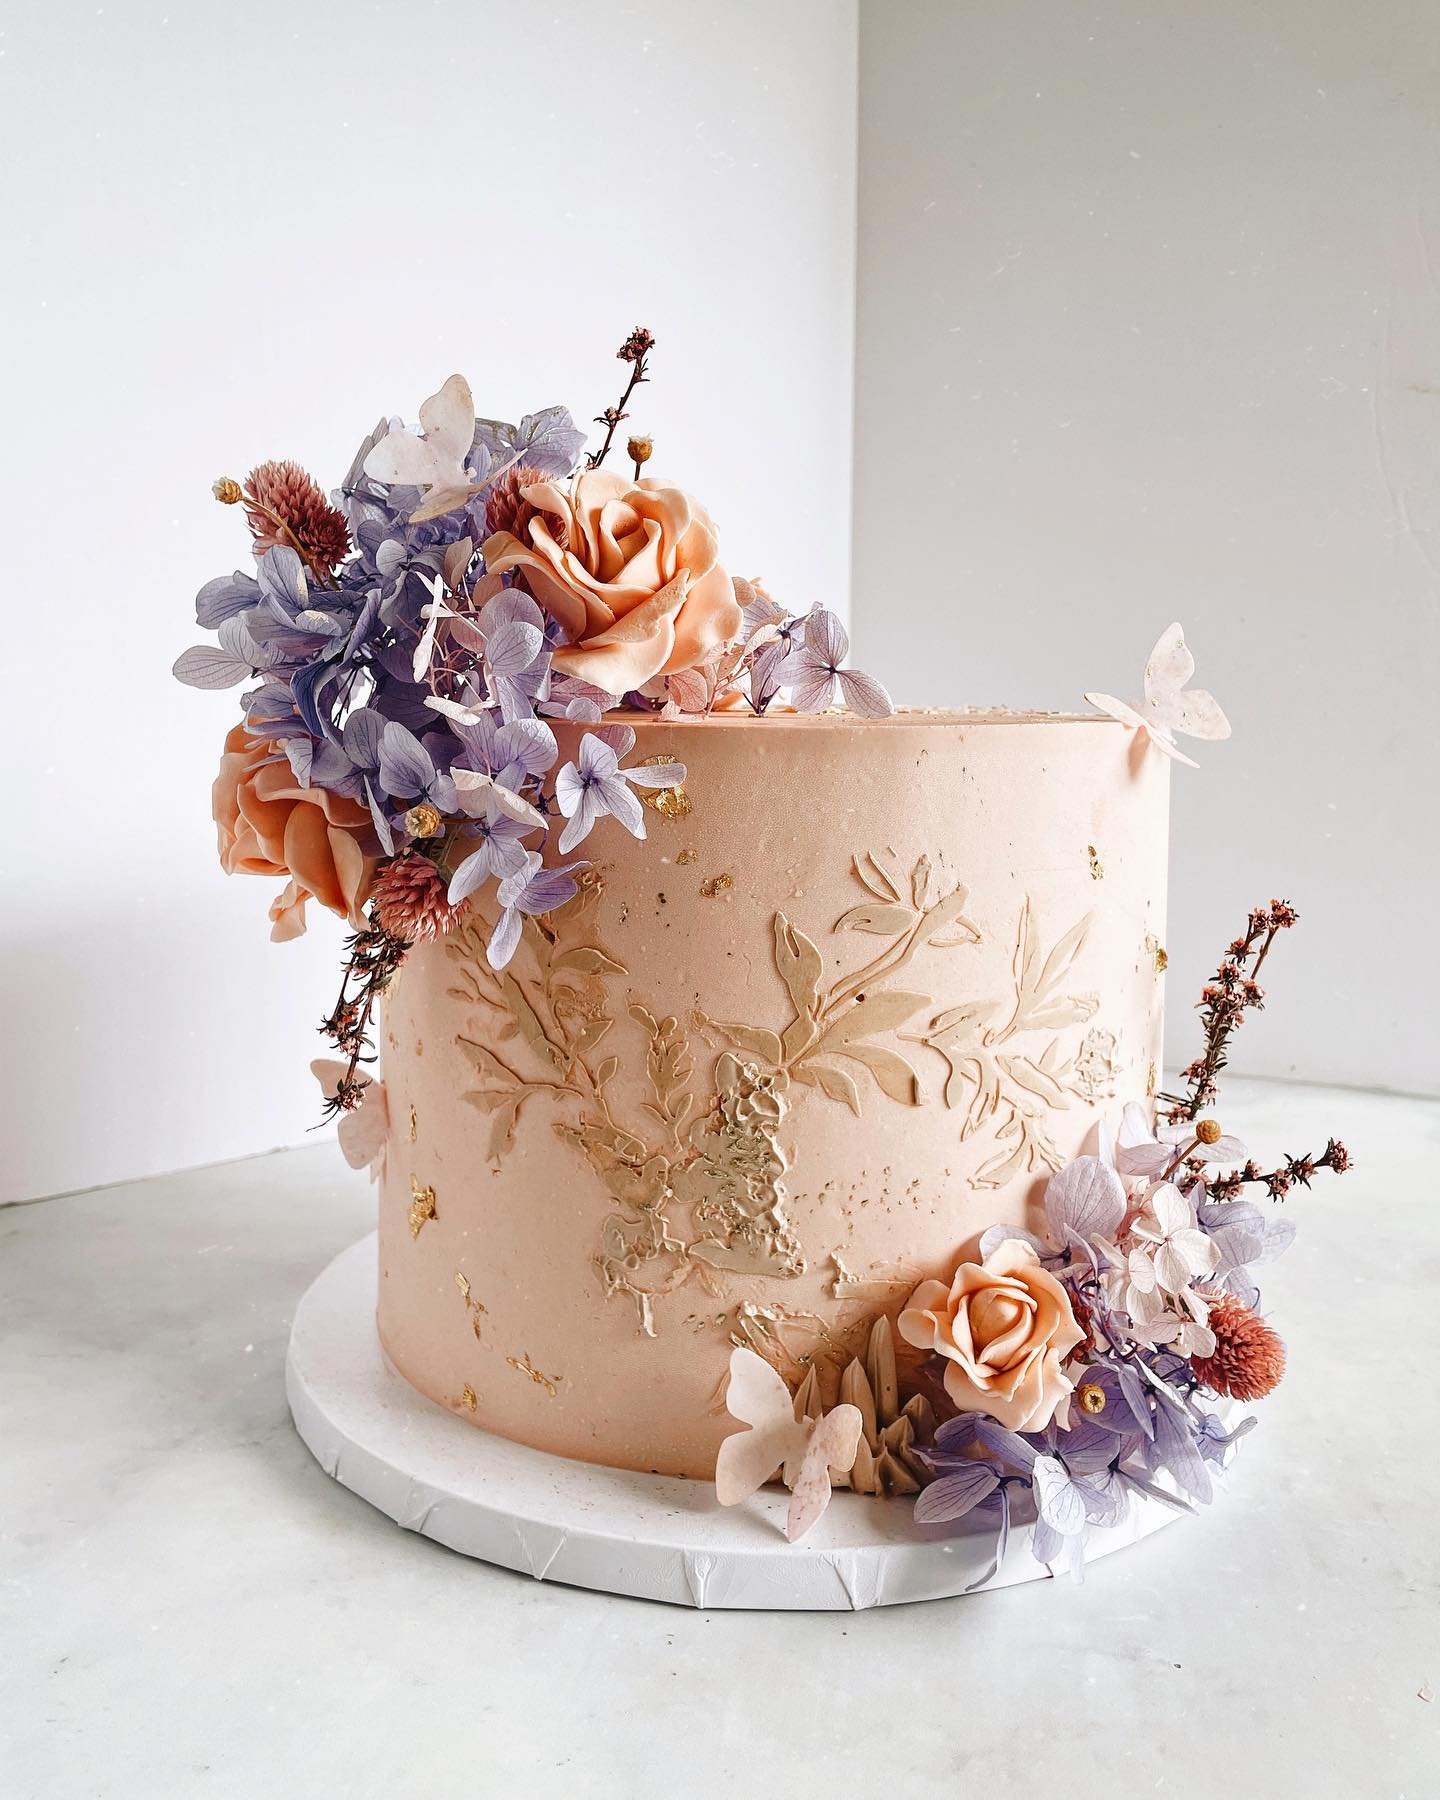 Peach and lavender 🌾 .
.
.
.// #cakedesign #driedflowers #fondantflowers #imprintedbase #thatsdarling #houstoncakes #sweetcreations